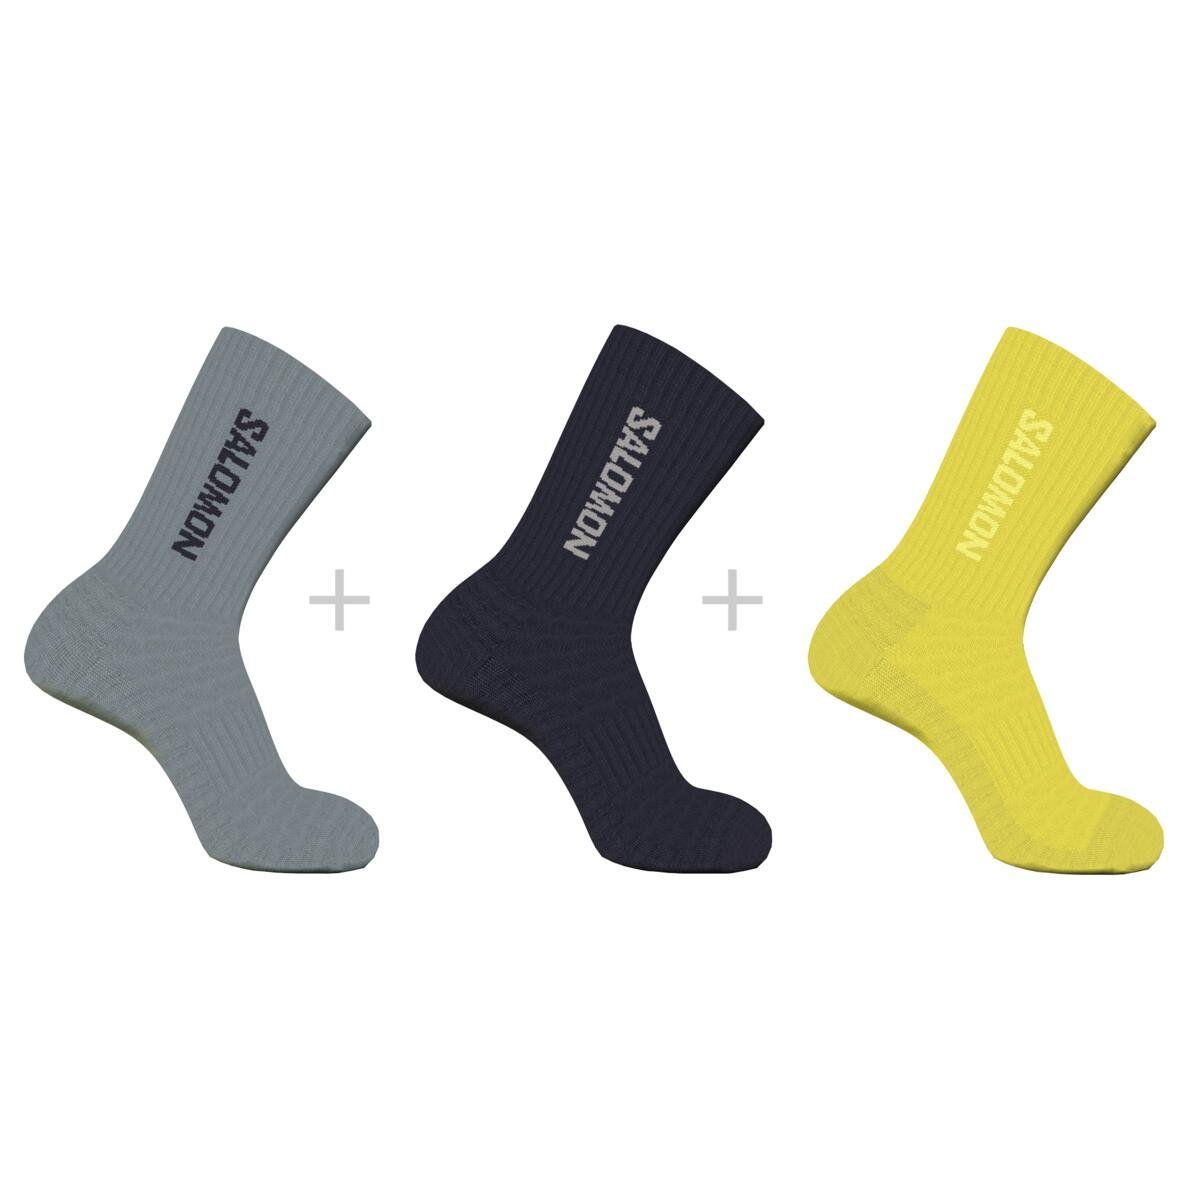 Ponožky Salomon Everyday Crew 3-Pack - sivé/čierne/žlté